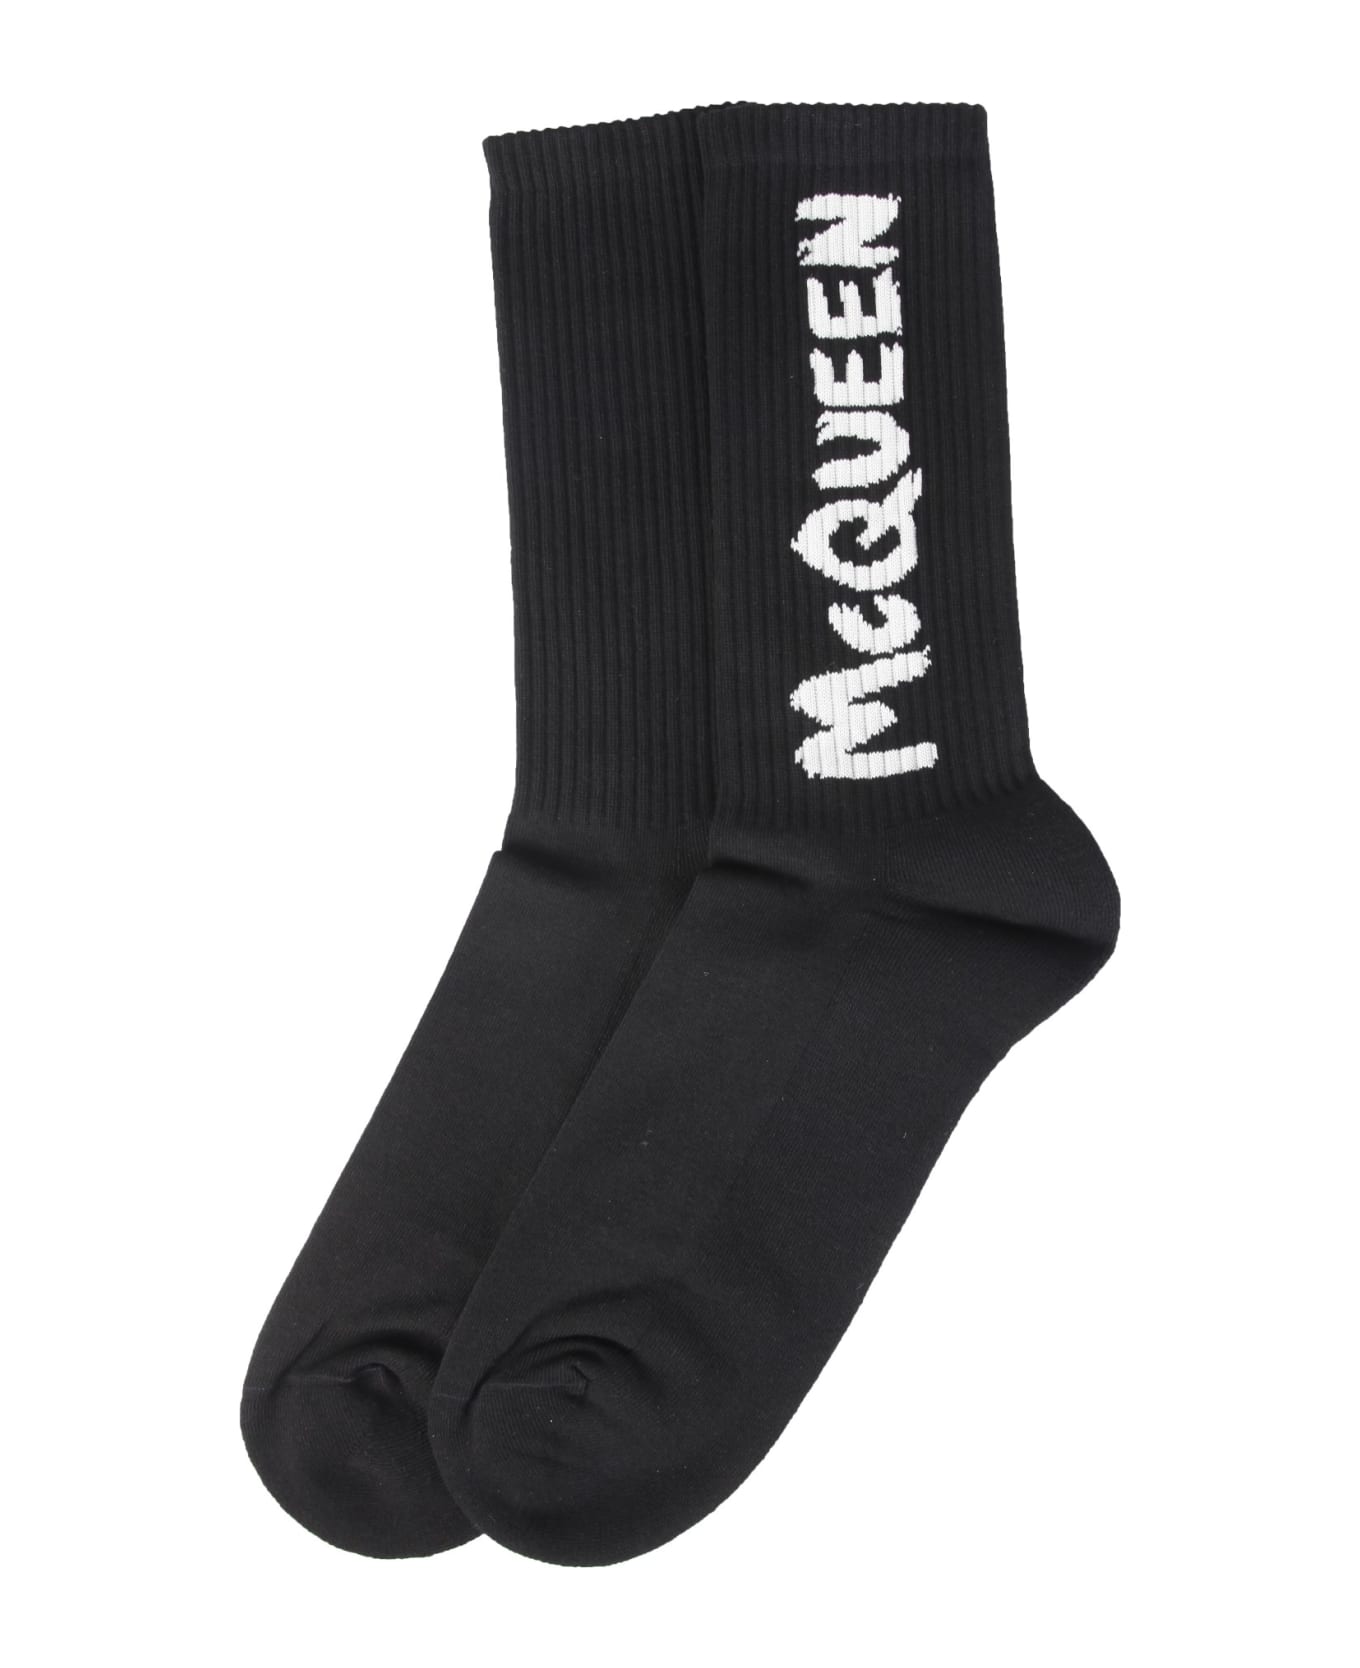 Alexander McQueen Graffiti Logo Socks - Black/ivory 靴下